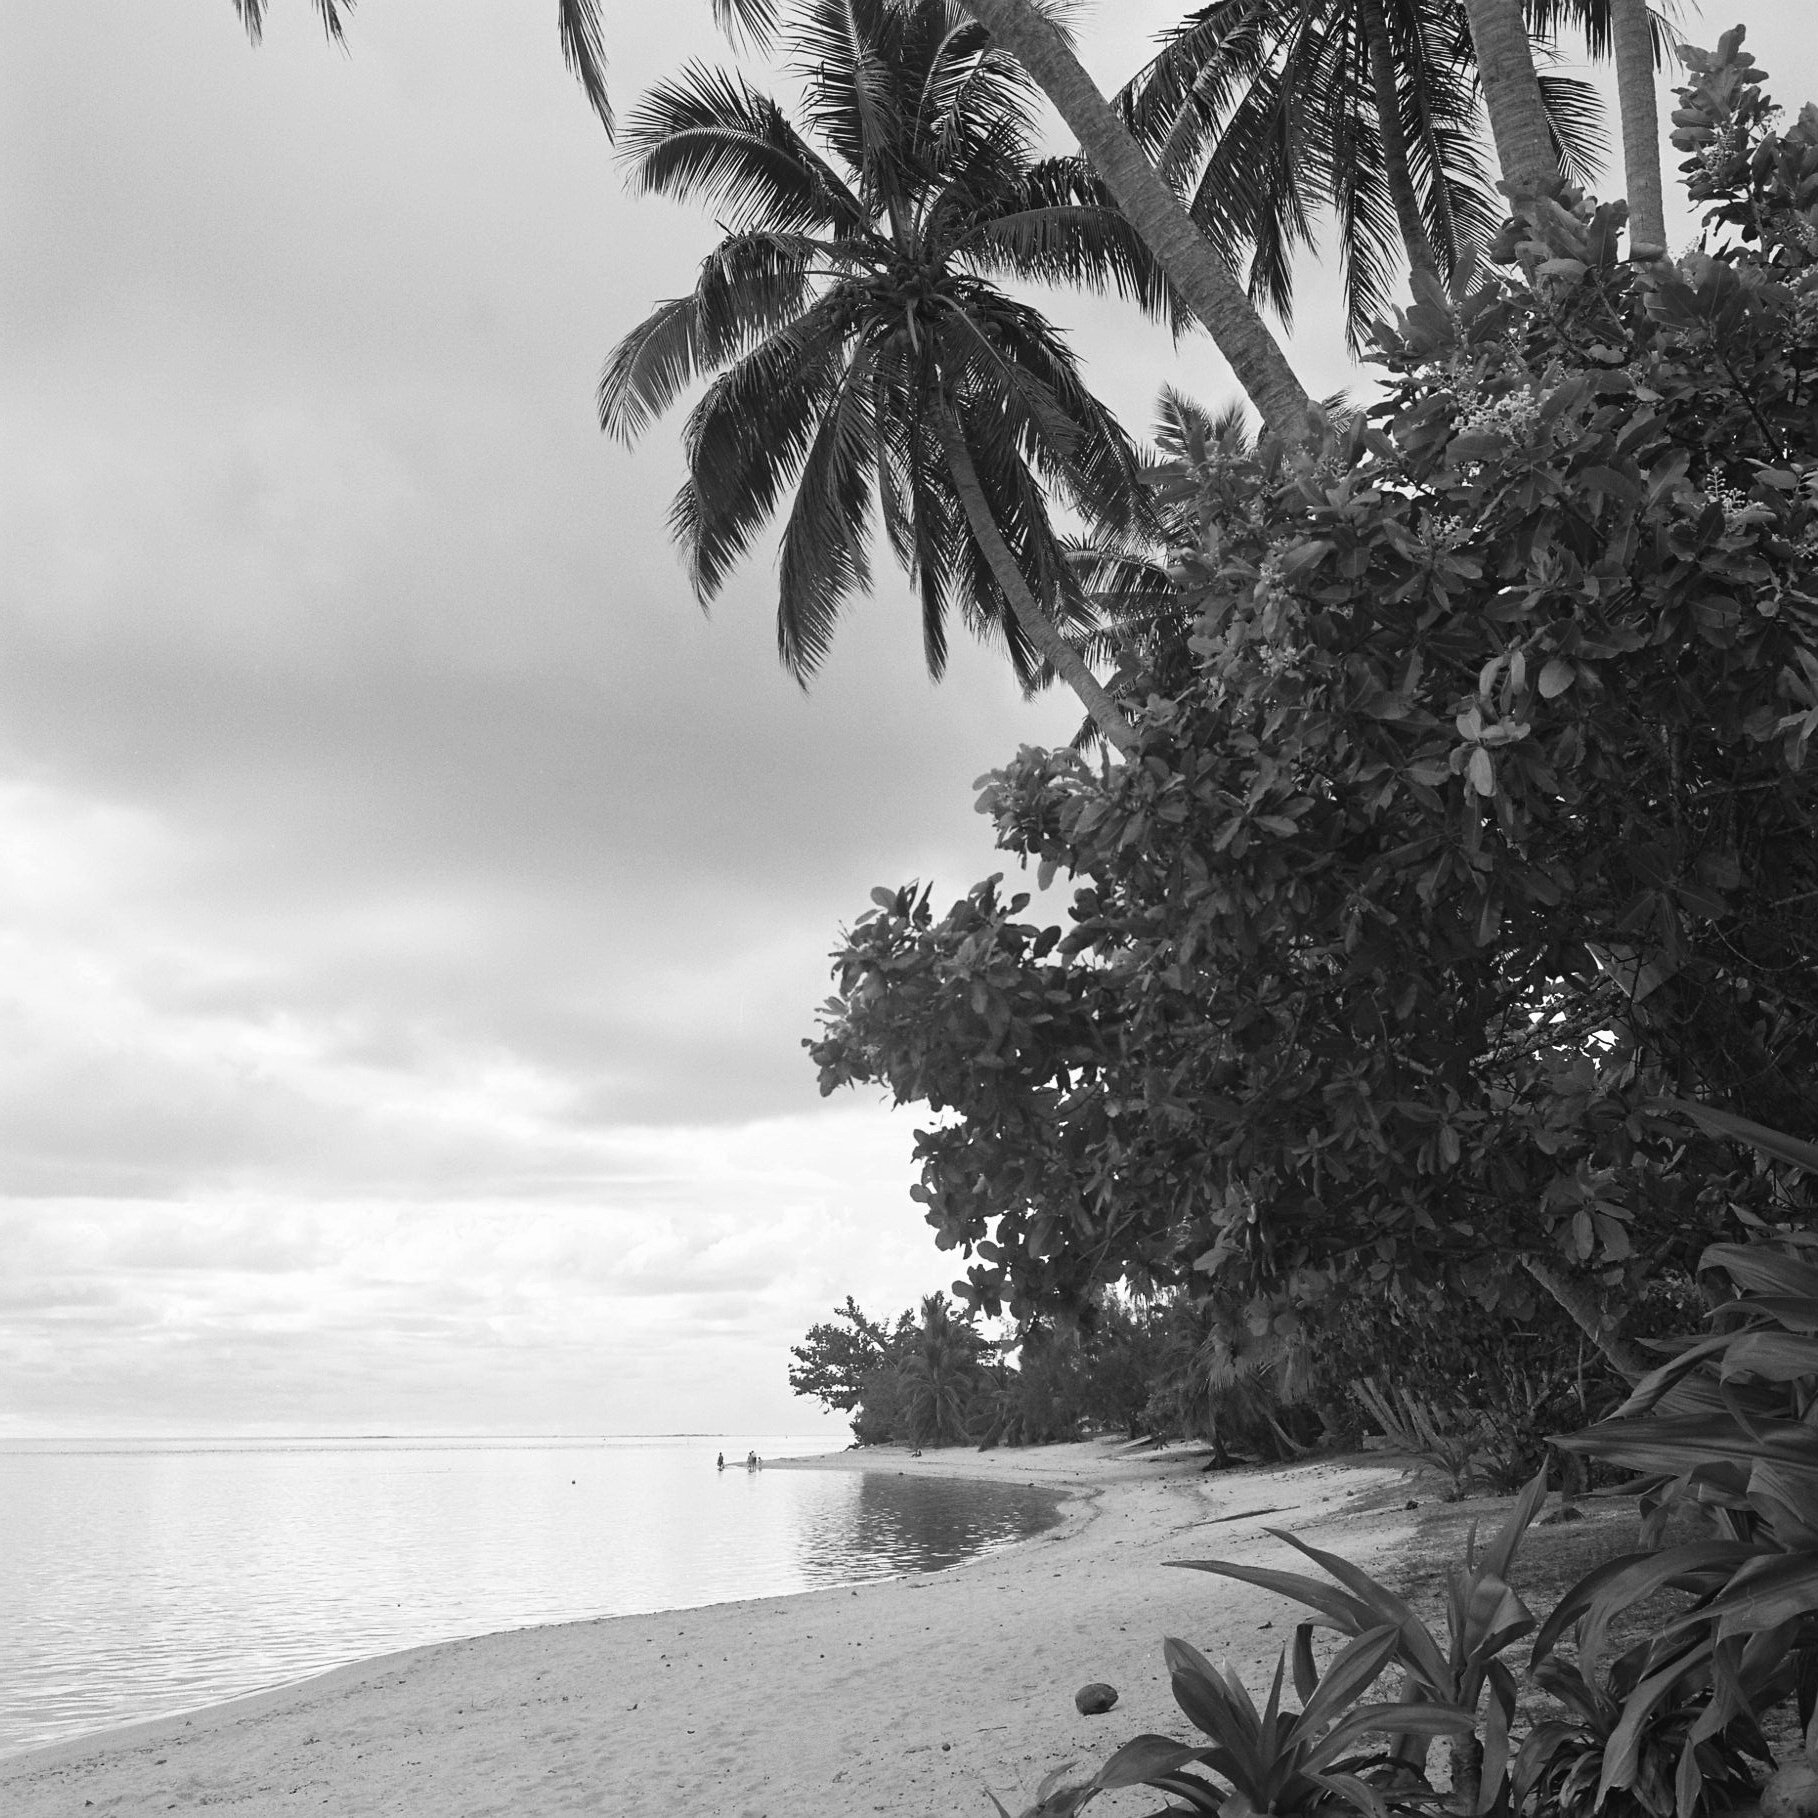 Moorea, Polinesia Francesa